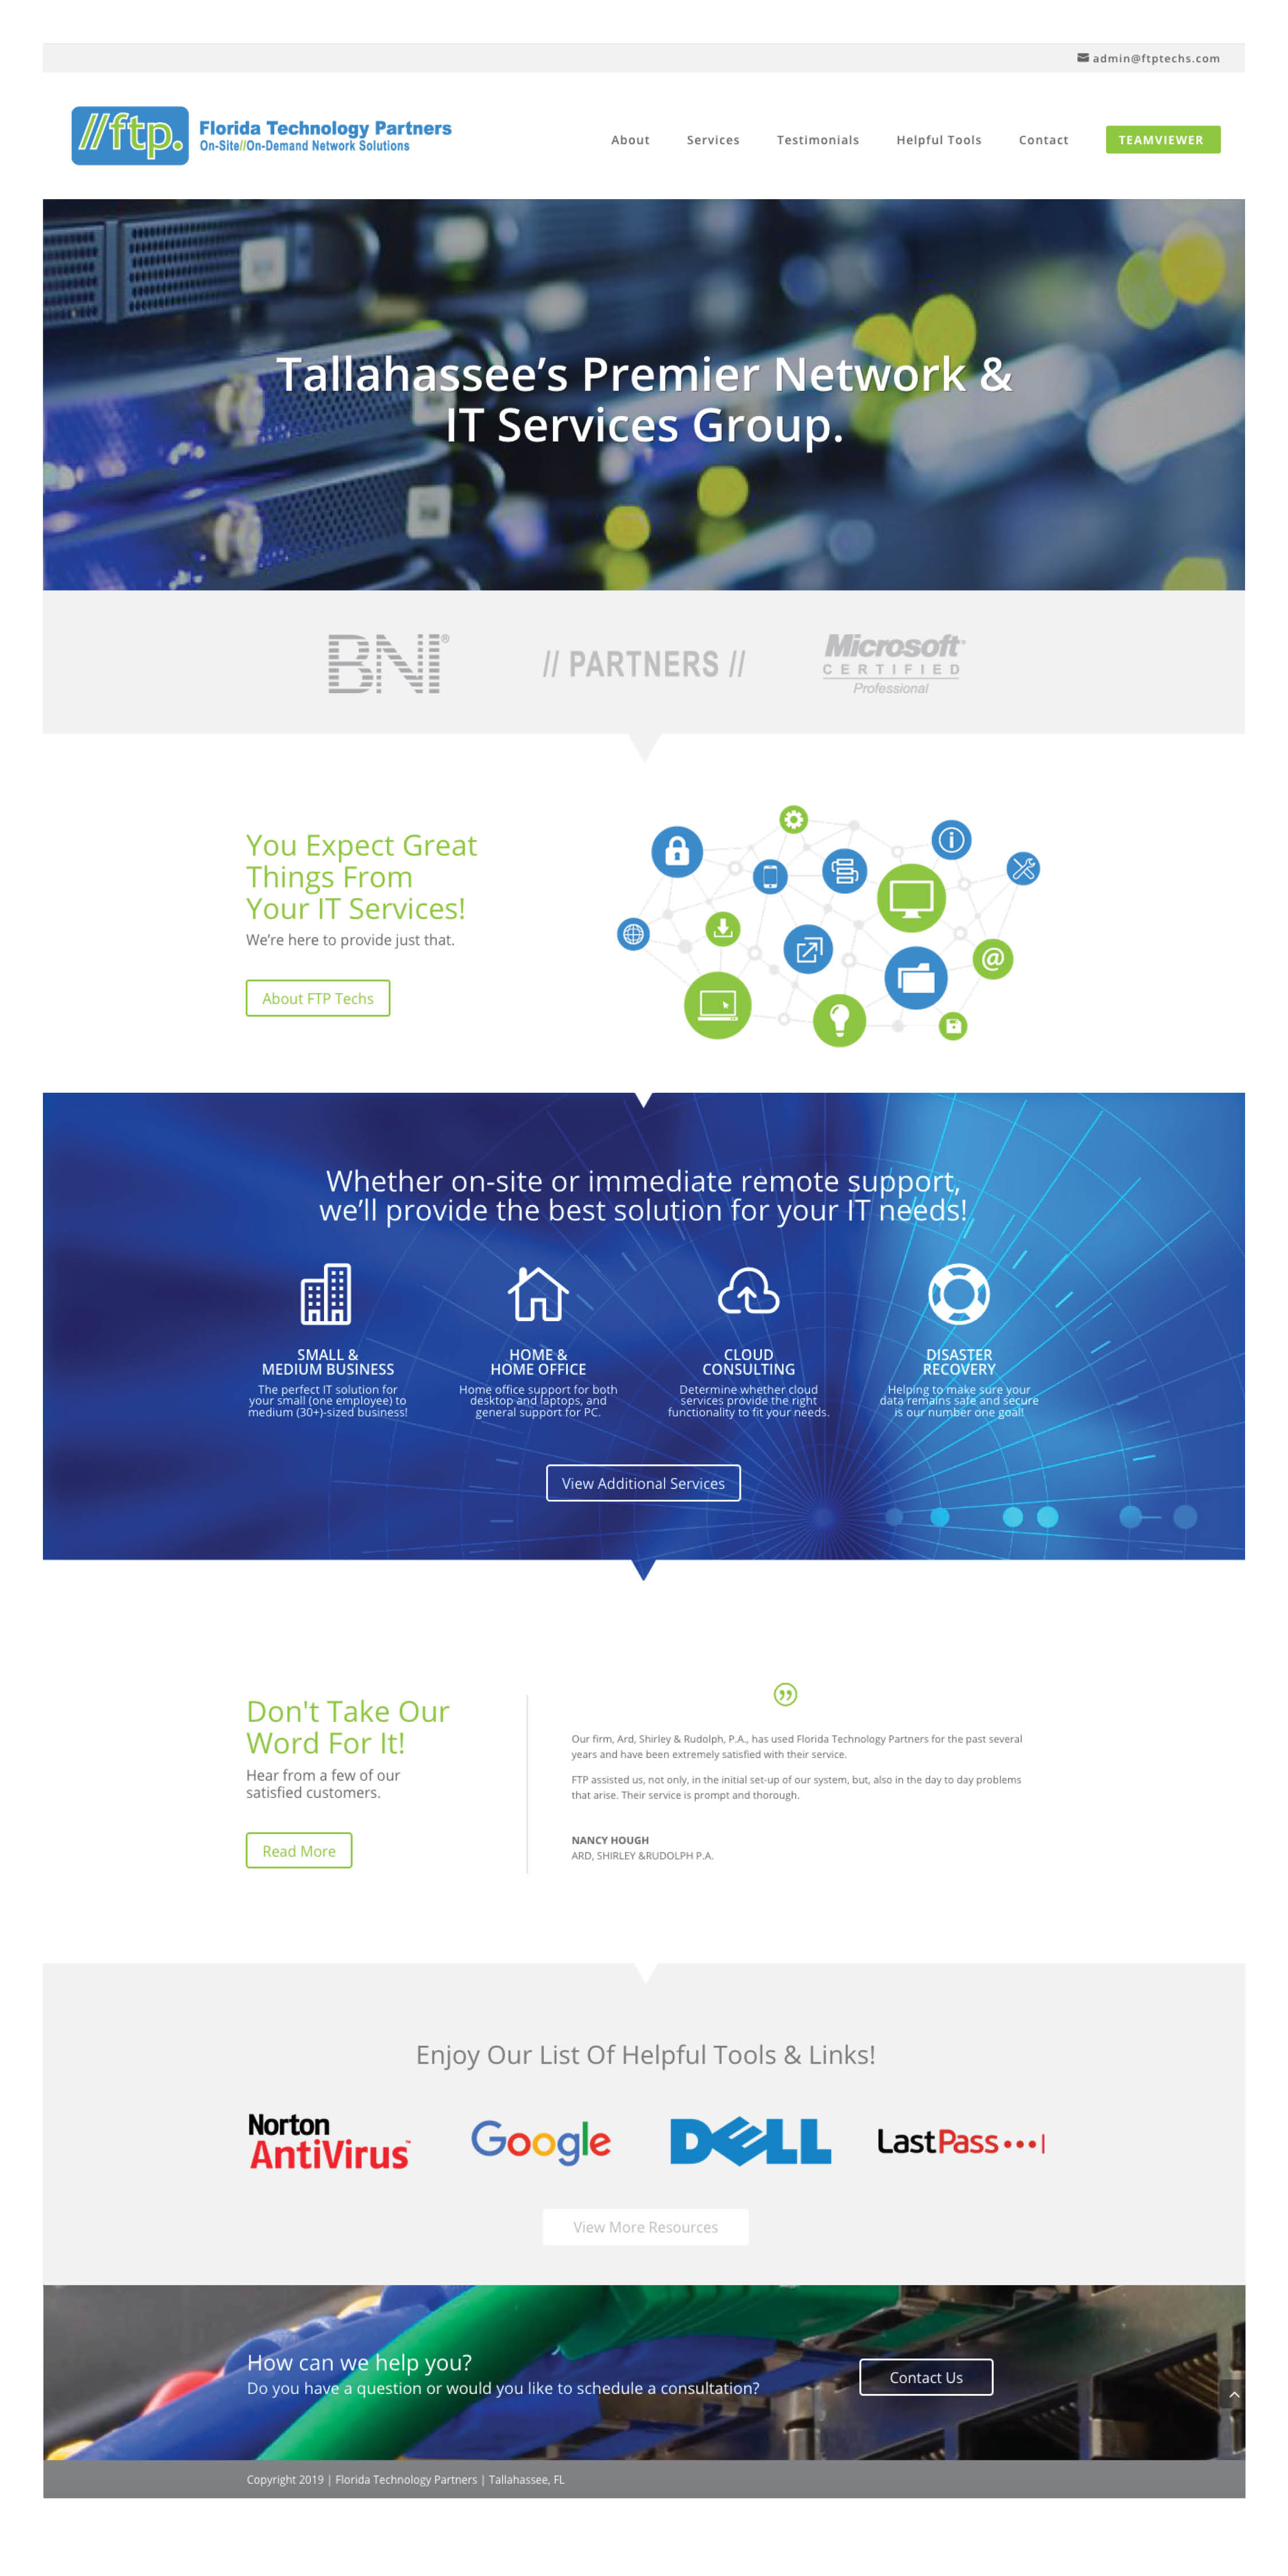 Florida Technology Partners Website Homepage Design